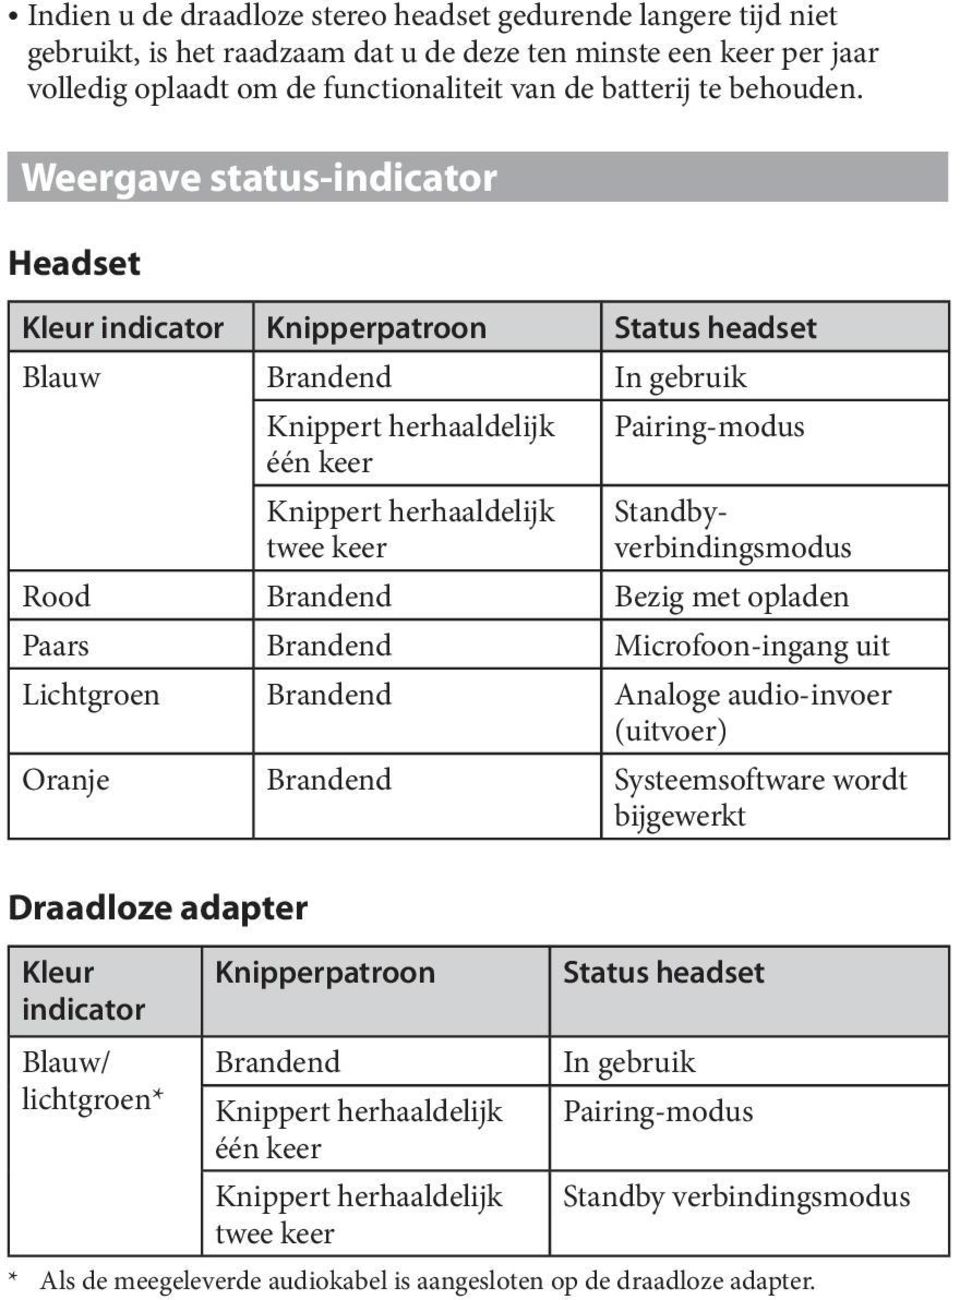 Weergave status-indicator Headset Kleur indicator Knipperpatroon Status headset Blauw Brandend In gebruik Knippert herhaaldelijk één keer Pairing-modus Knippert herhaaldelijk twee keer